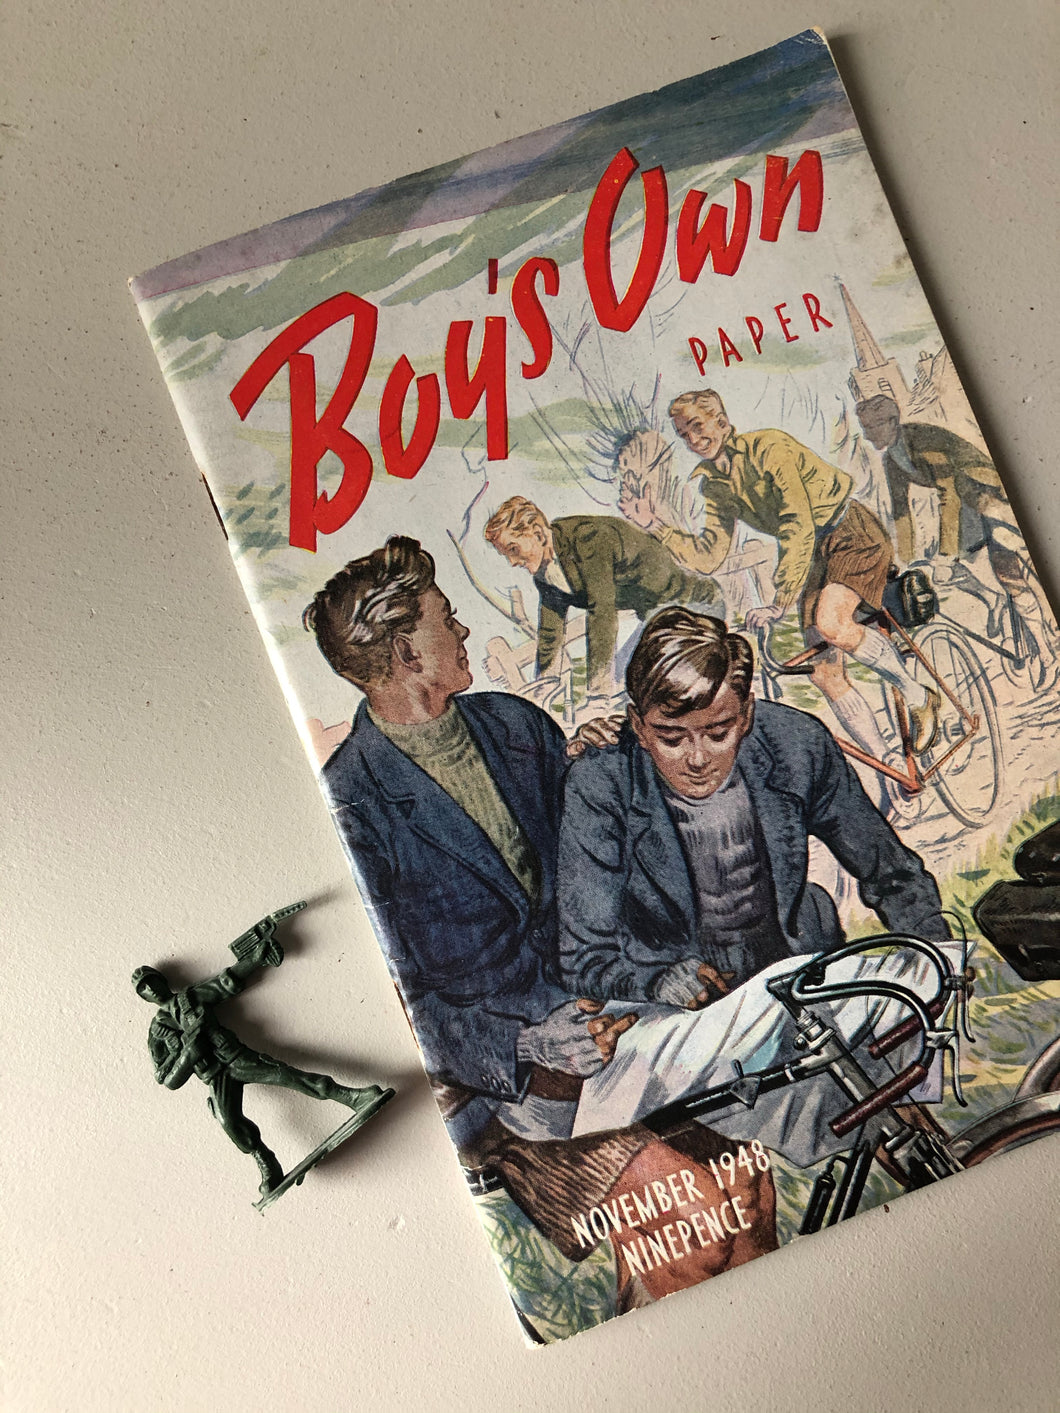 Boys Own magazine, 1940s edition